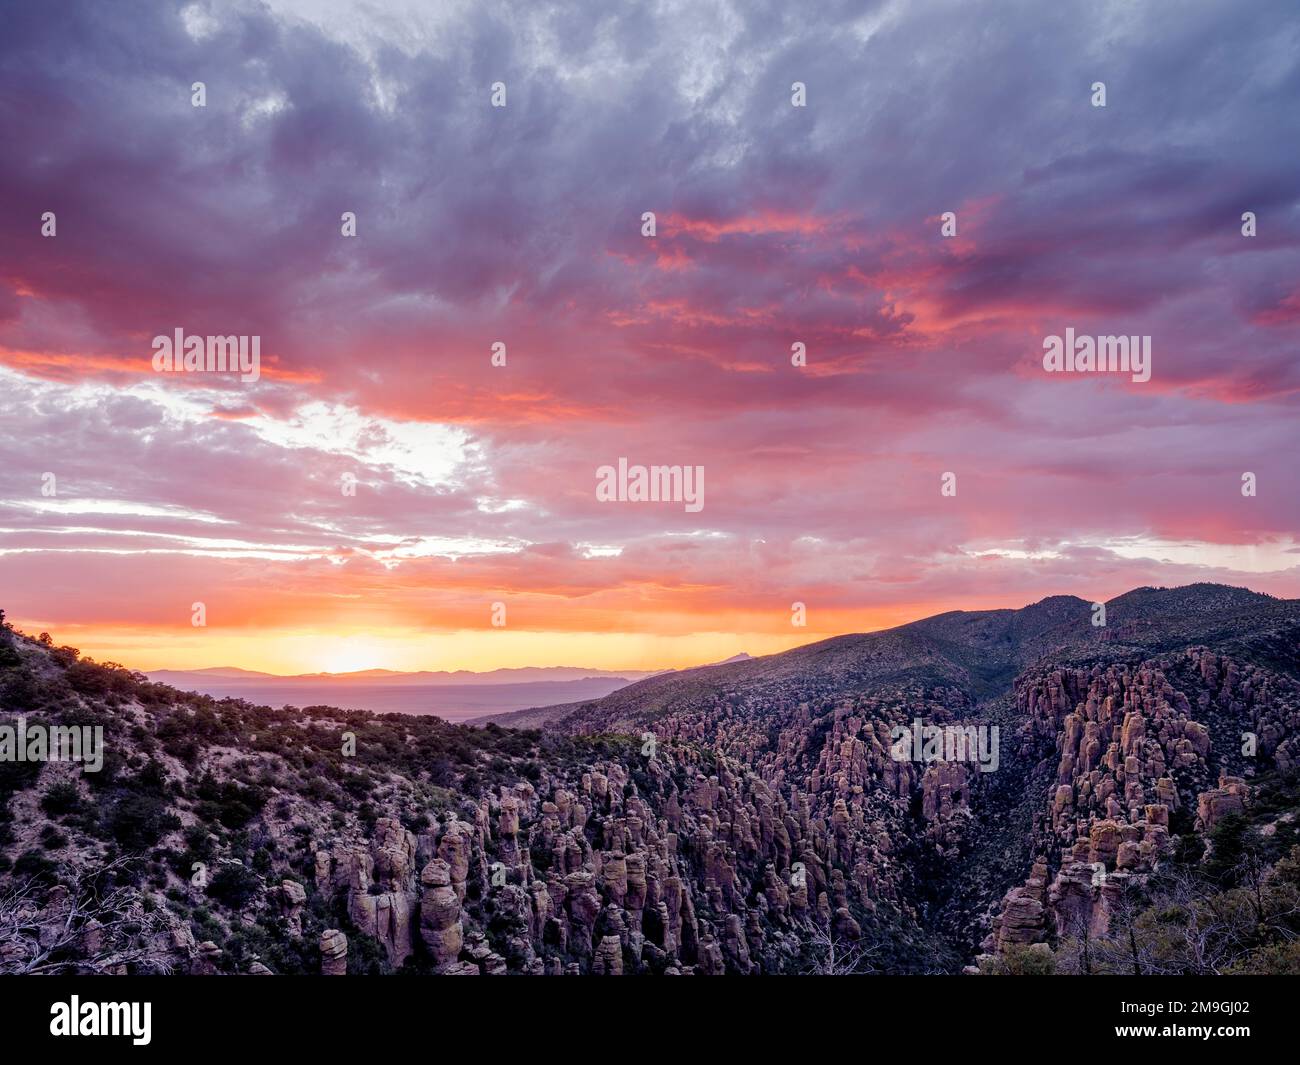 Landscape with mountains at sunset, Sugarloaf Mountain, Chiricahua National Monument, Arizona, USA Stock Photo